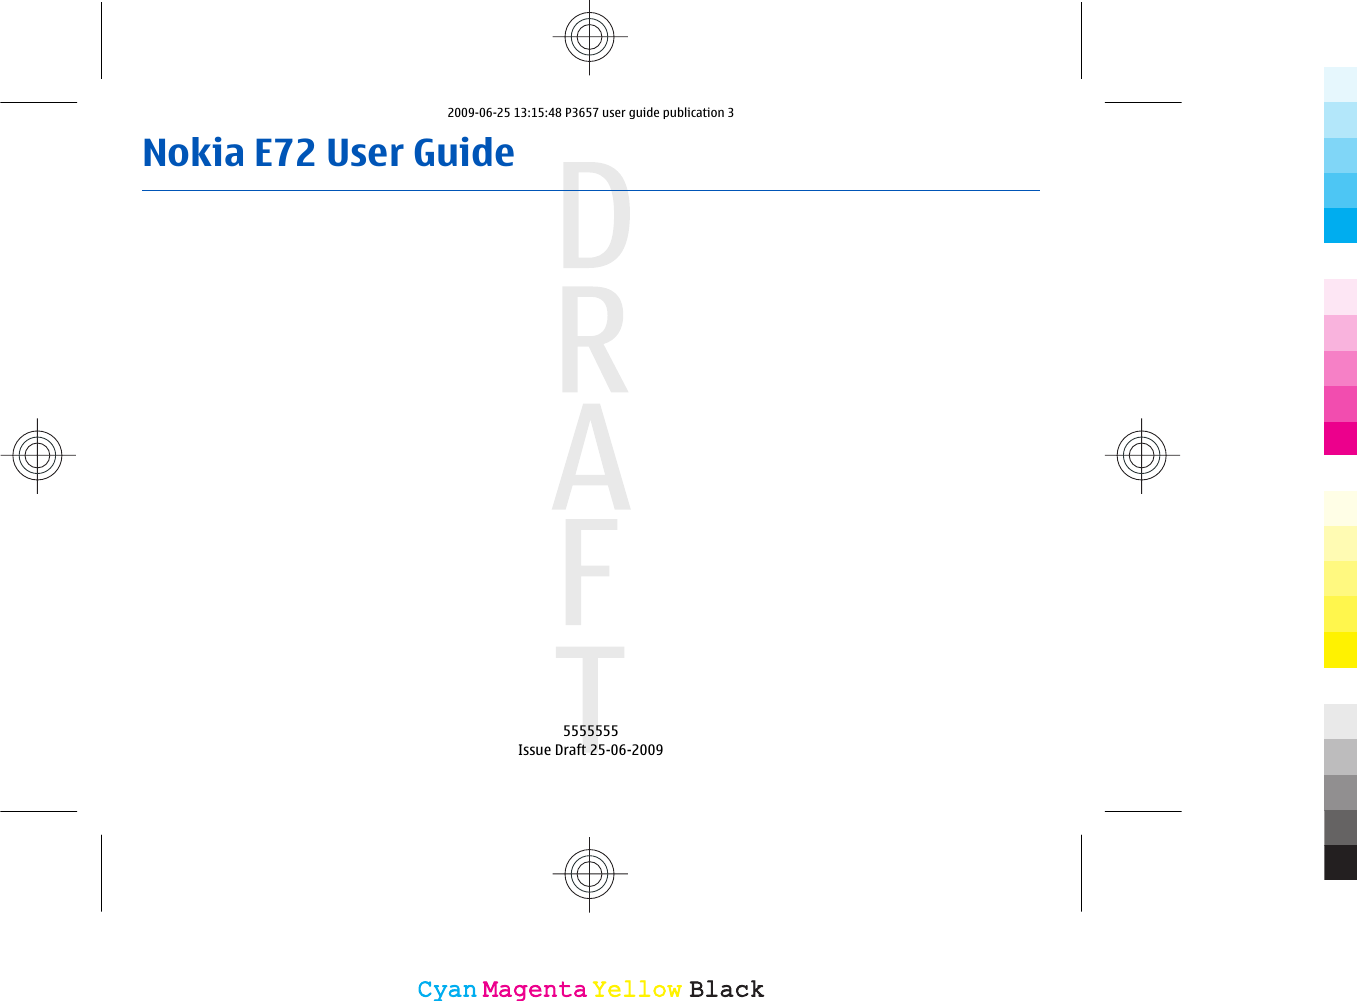 Nokia E72 User Guide5555555Issue Draft 25-06-2009CyanCyanMagentaMagentaYellowYellowBlackBlack2009-06-25 13:15:48 P3657 user guide publication 3